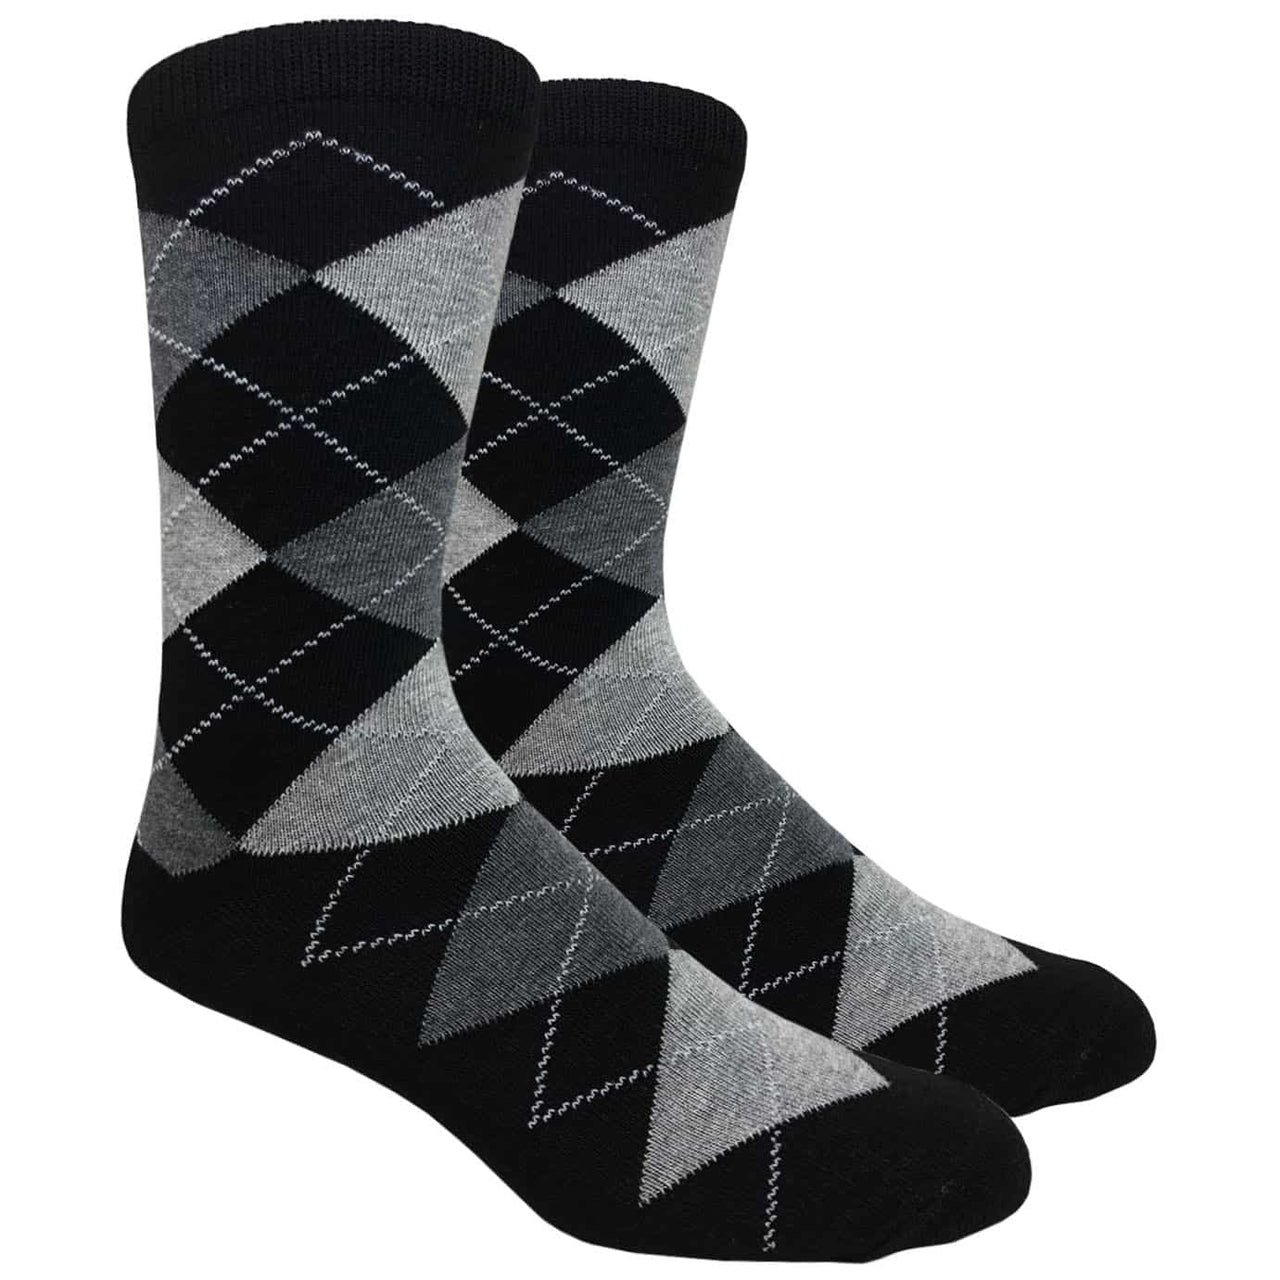 Black Argyle Crew Socks